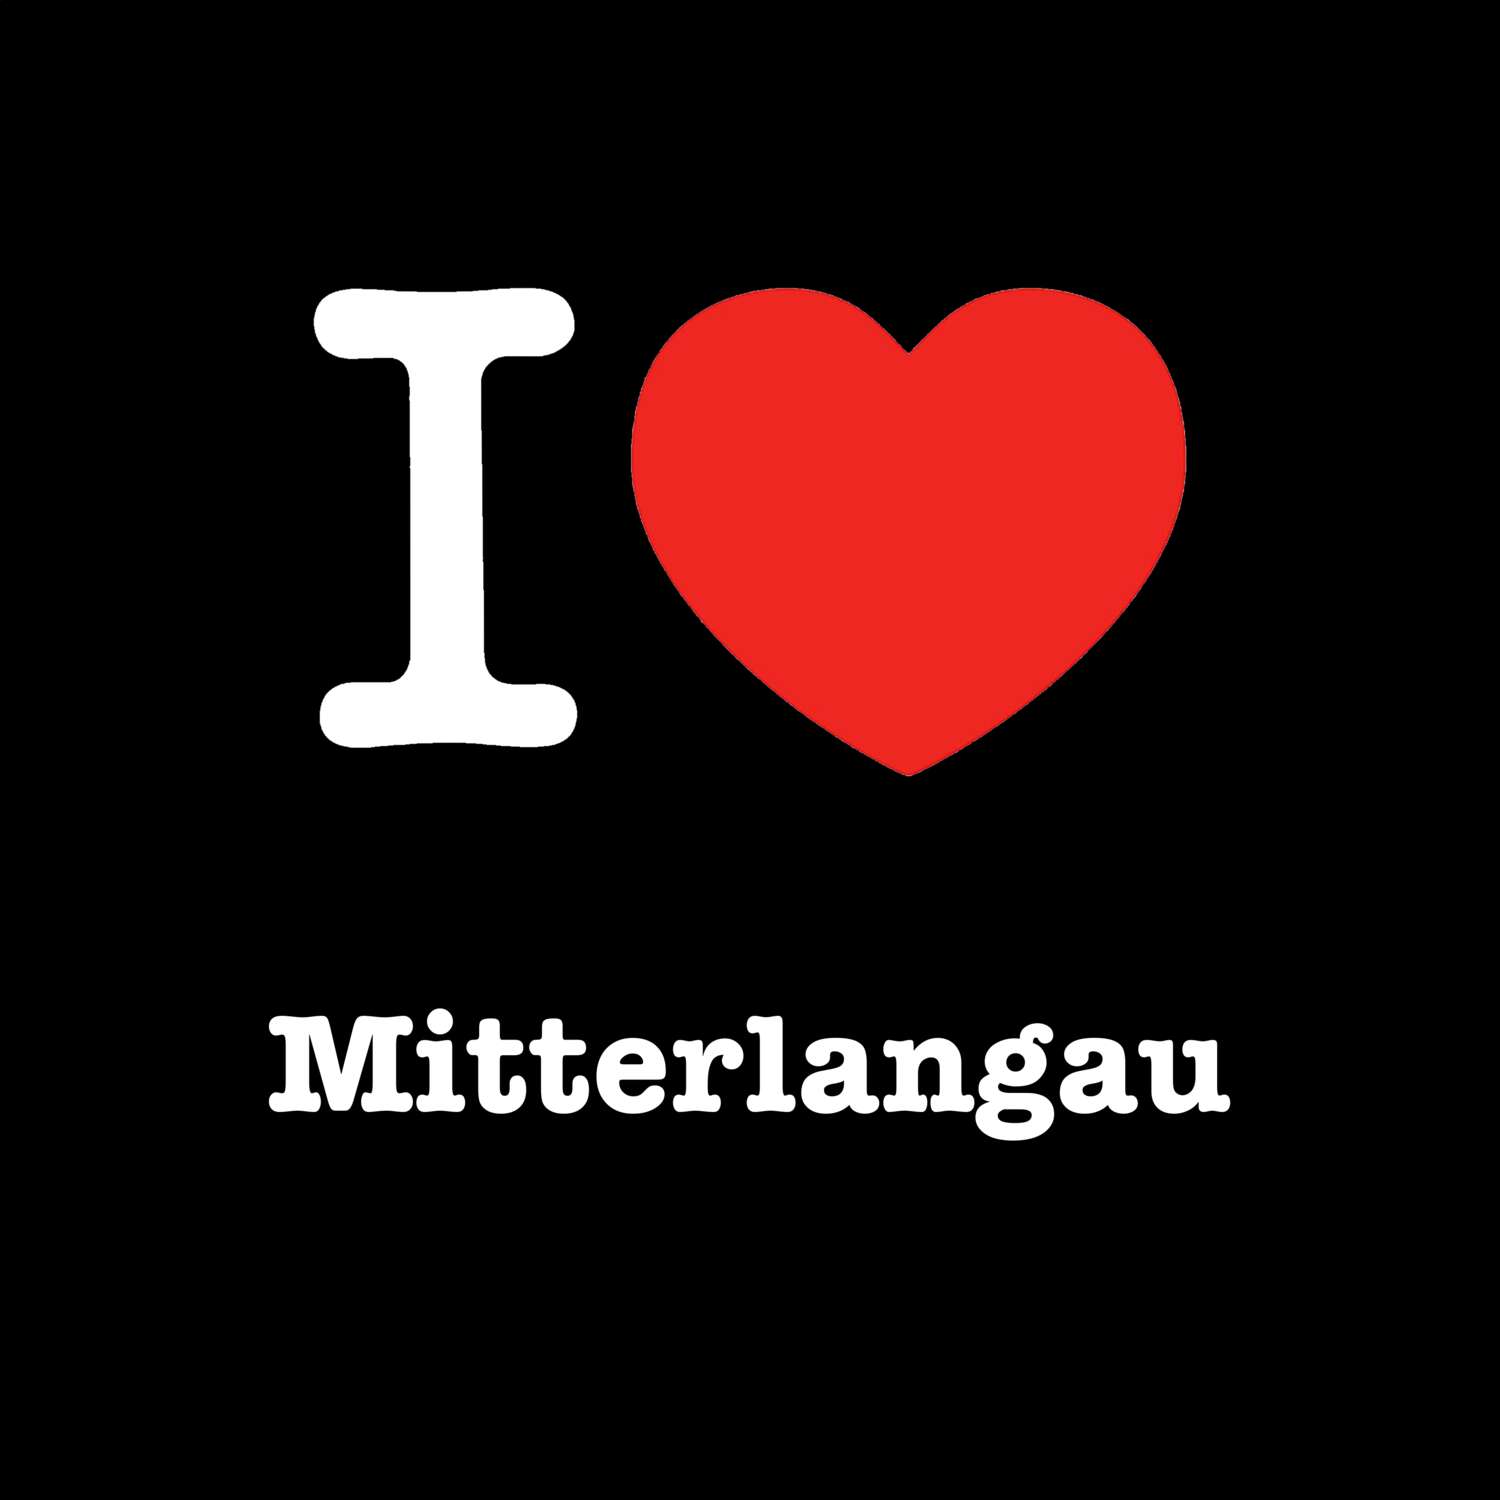 Mitterlangau T-Shirt »I love«